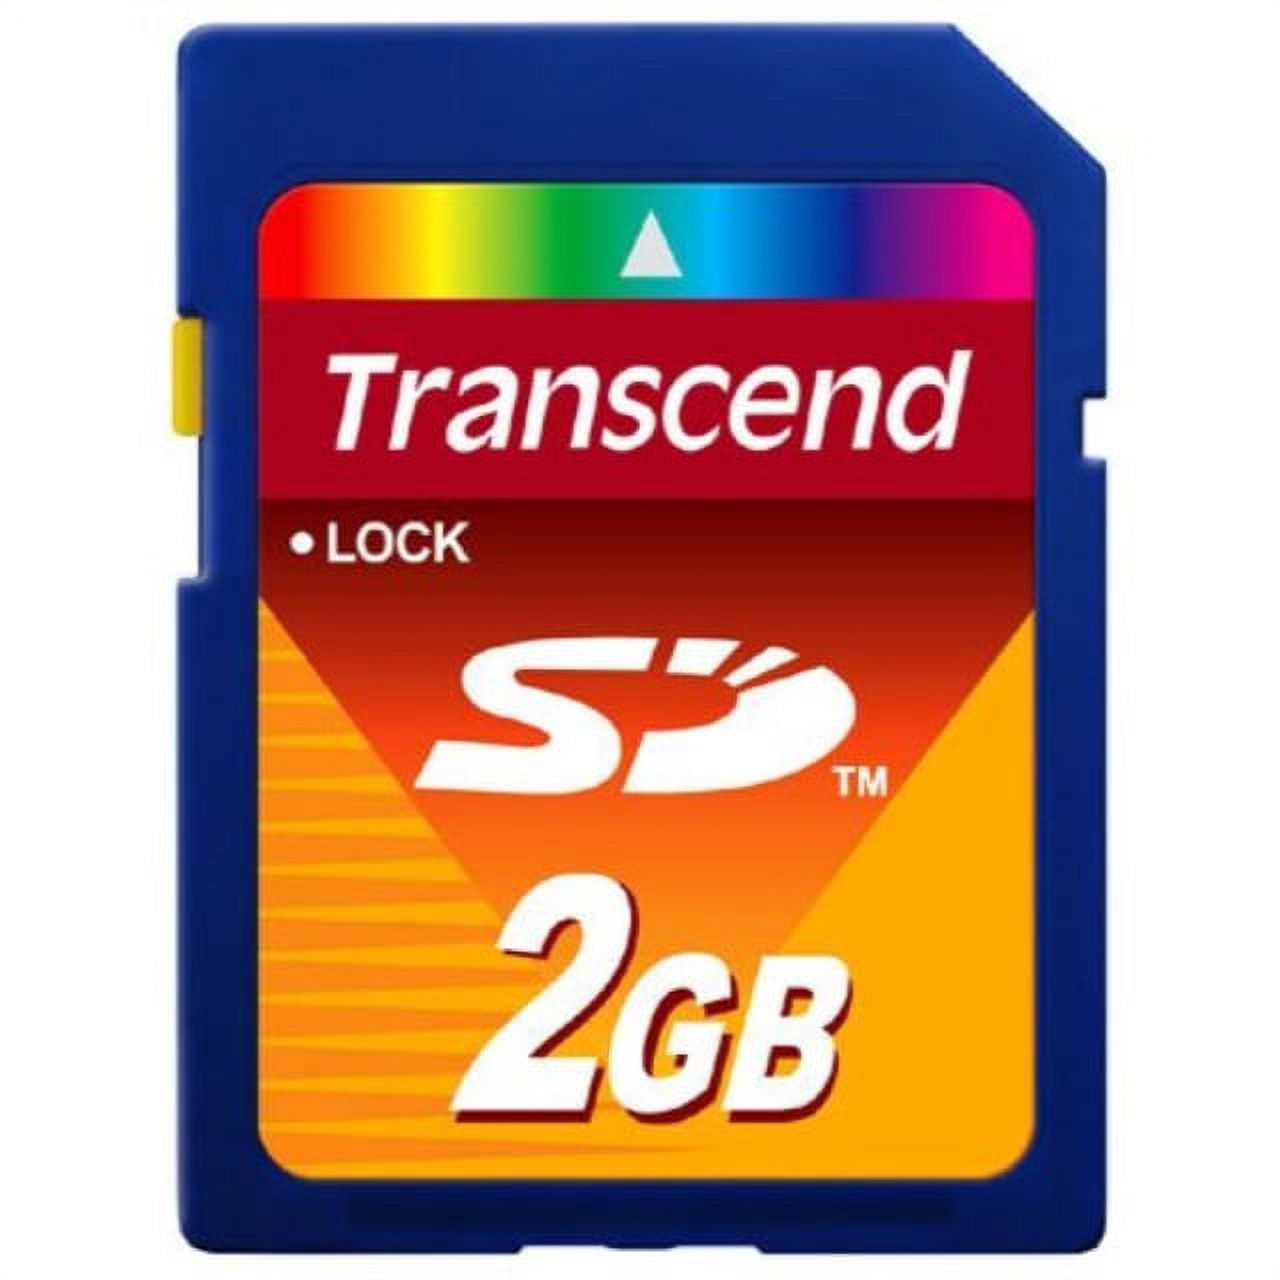 Kodak EasyShare M550 Digital Camera Memory Card 2GB Standard Secure Digital (SD) Memory Card - image 1 of 2